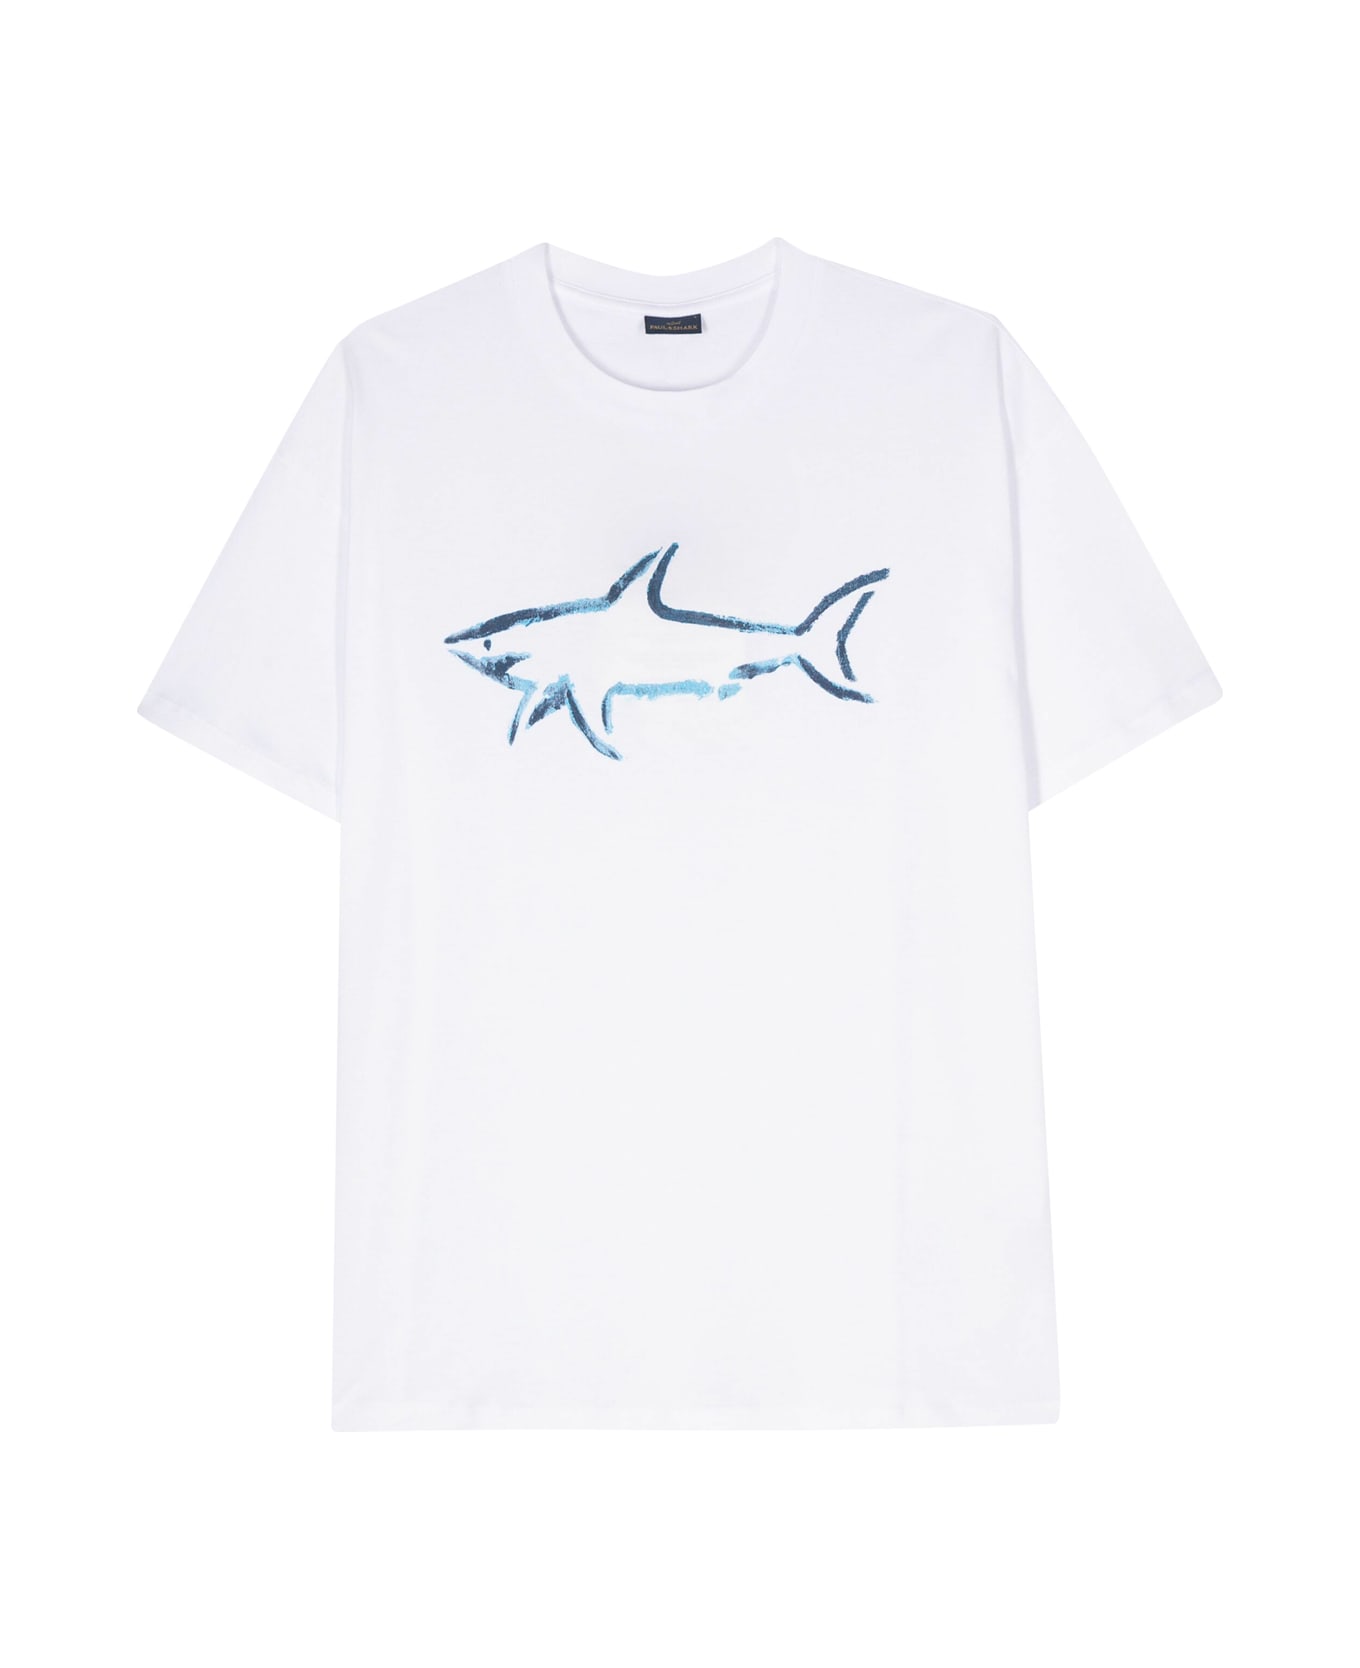 Paul&Shark T-shirt Cotton - White シャツ